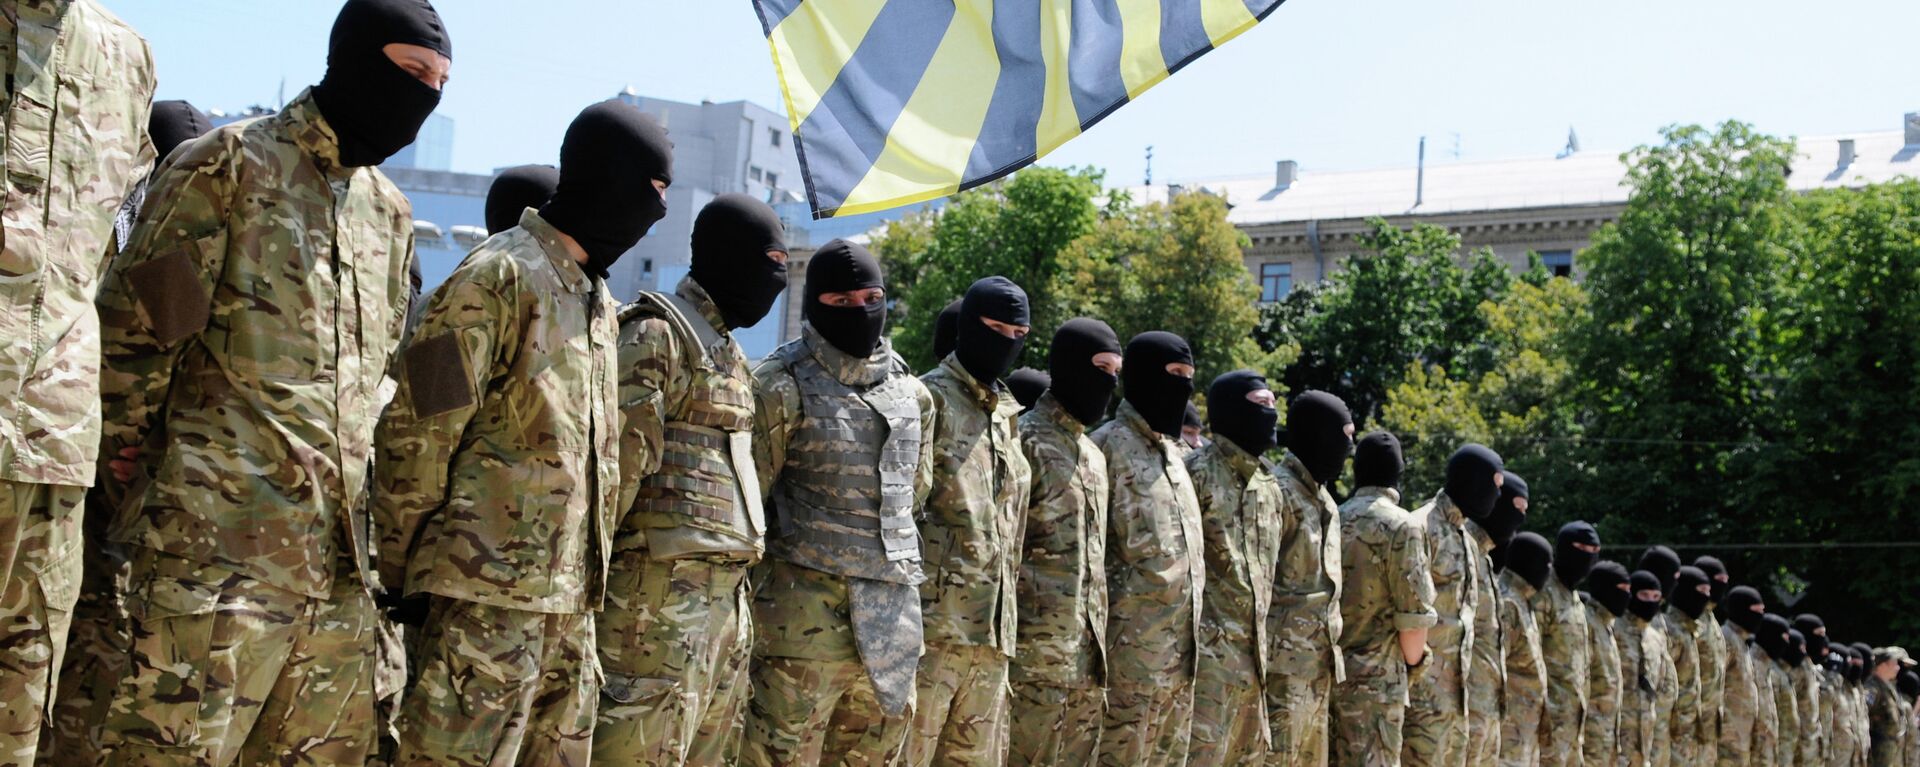 Azov battalion soldiers take oath in Kiev before being sent to Donbass - Sputnik International, 1920, 04.05.2017